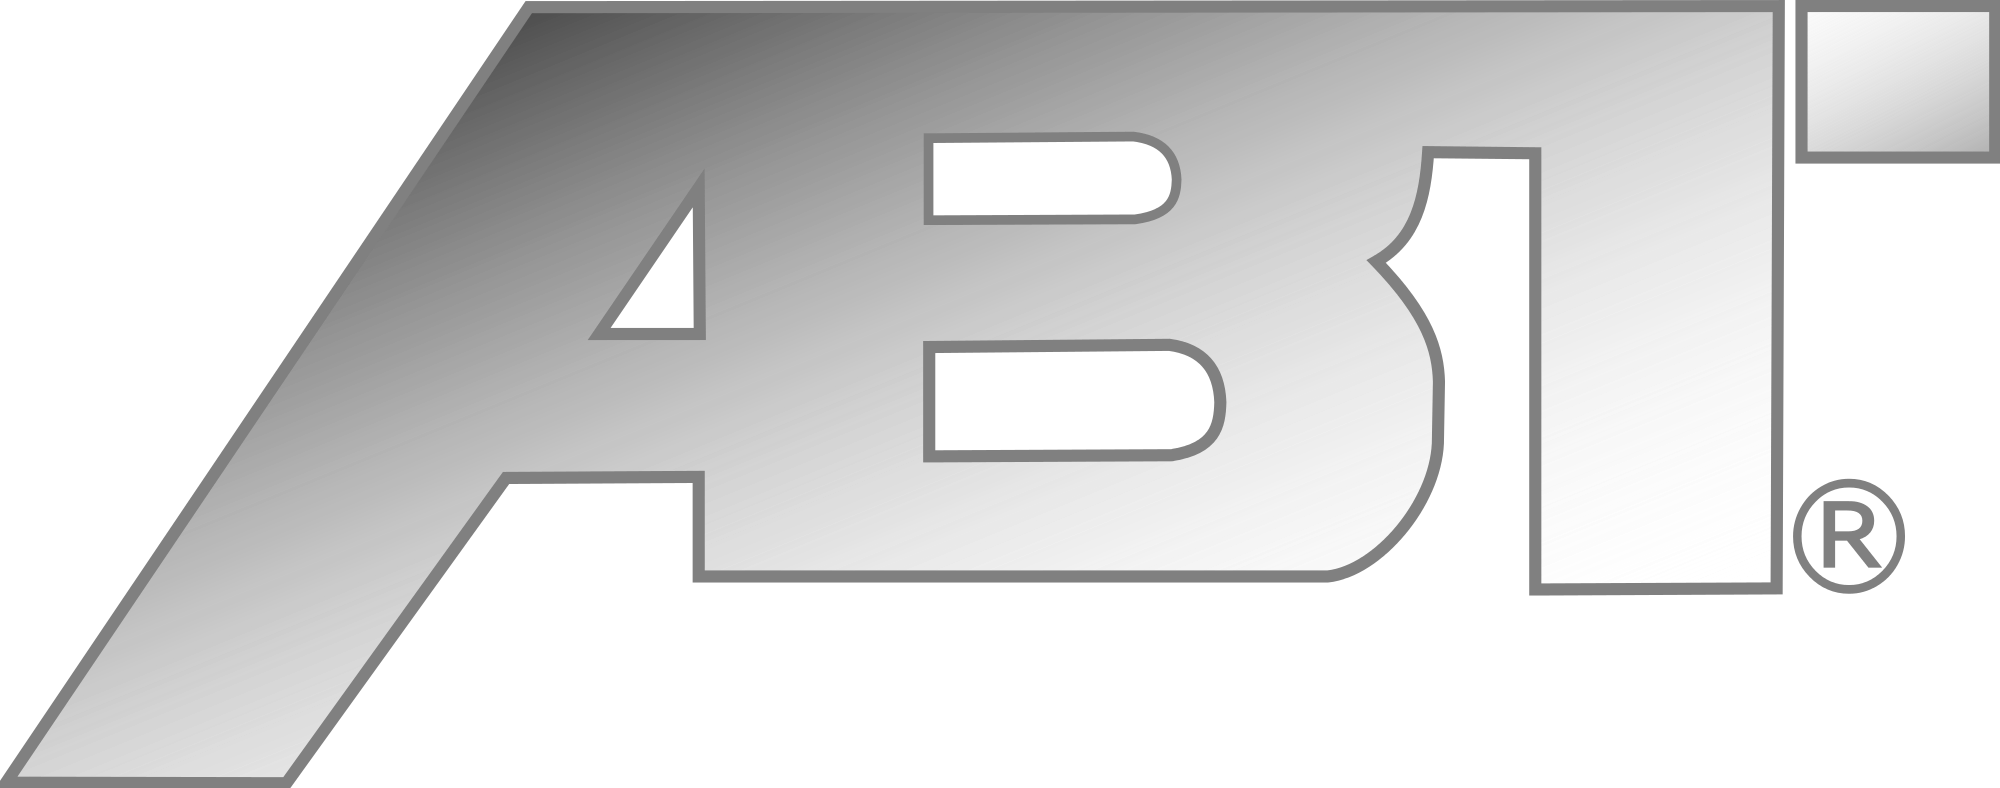 ABT Sportsline Logo 2560x1440